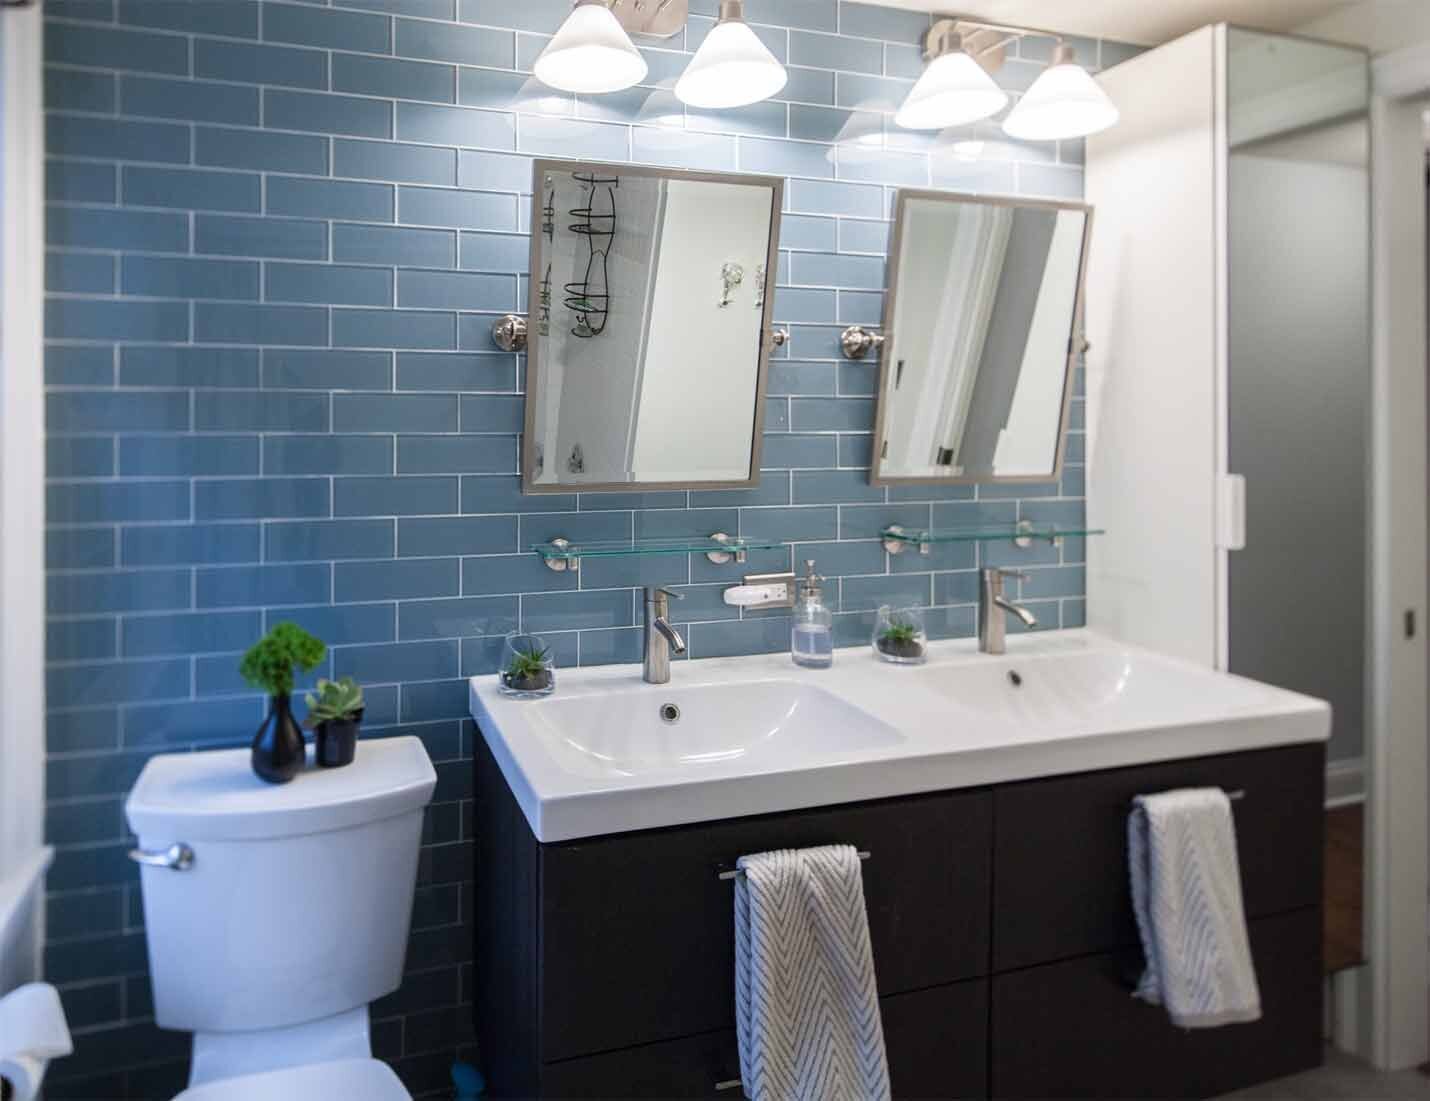 Bathroom design with blue subway tile